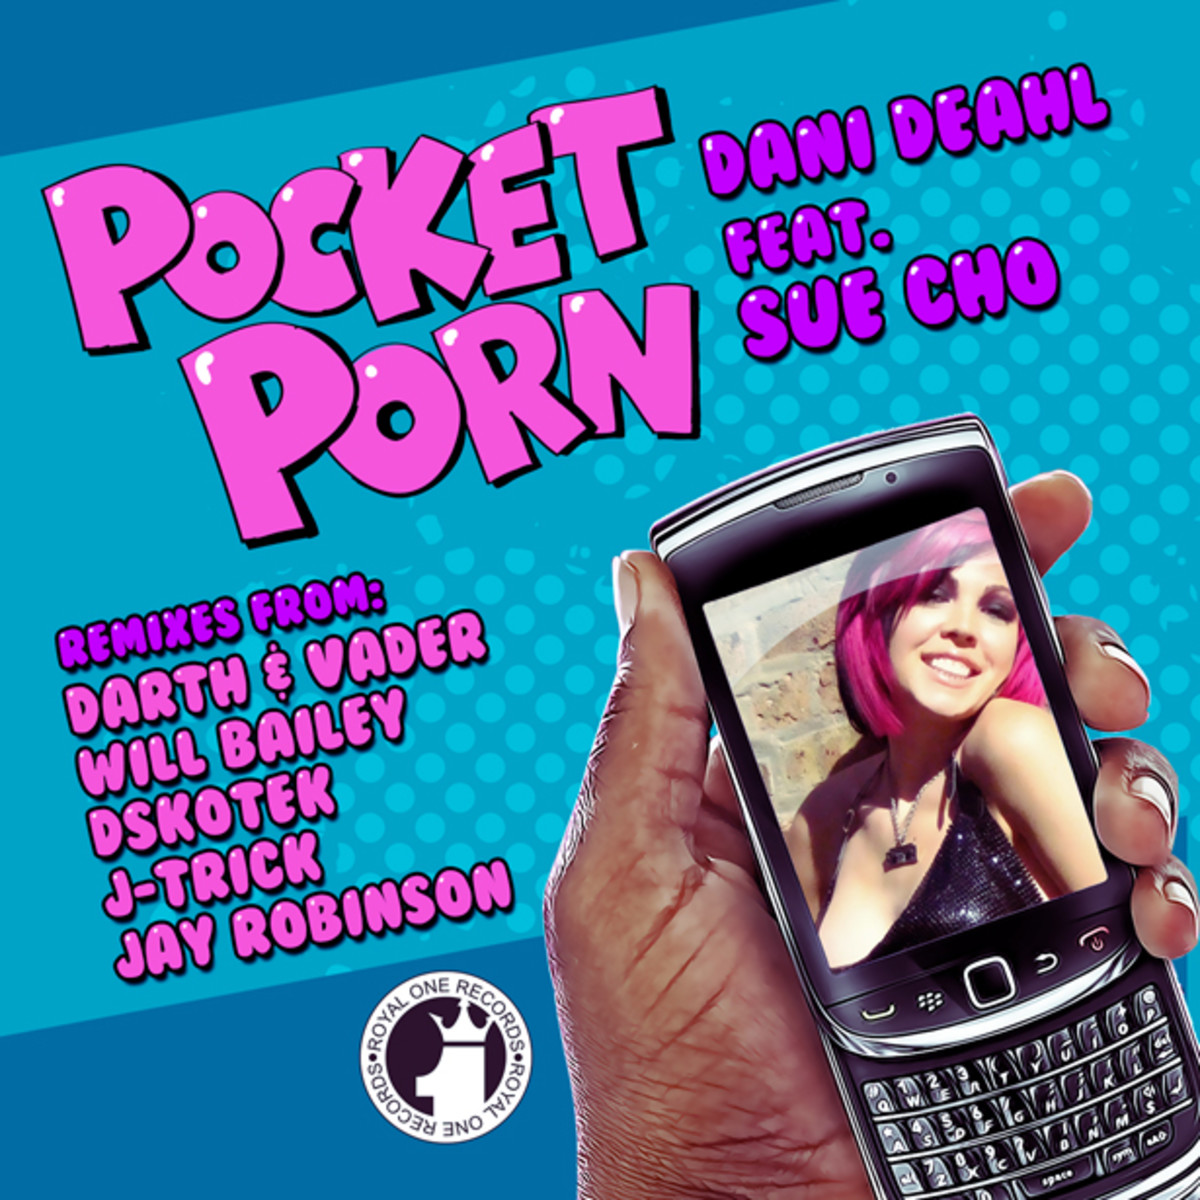 Free EDM Download: DSKOTEK Remix of "Pocket Porn" by Dani Deahl Featuring Sue Cho